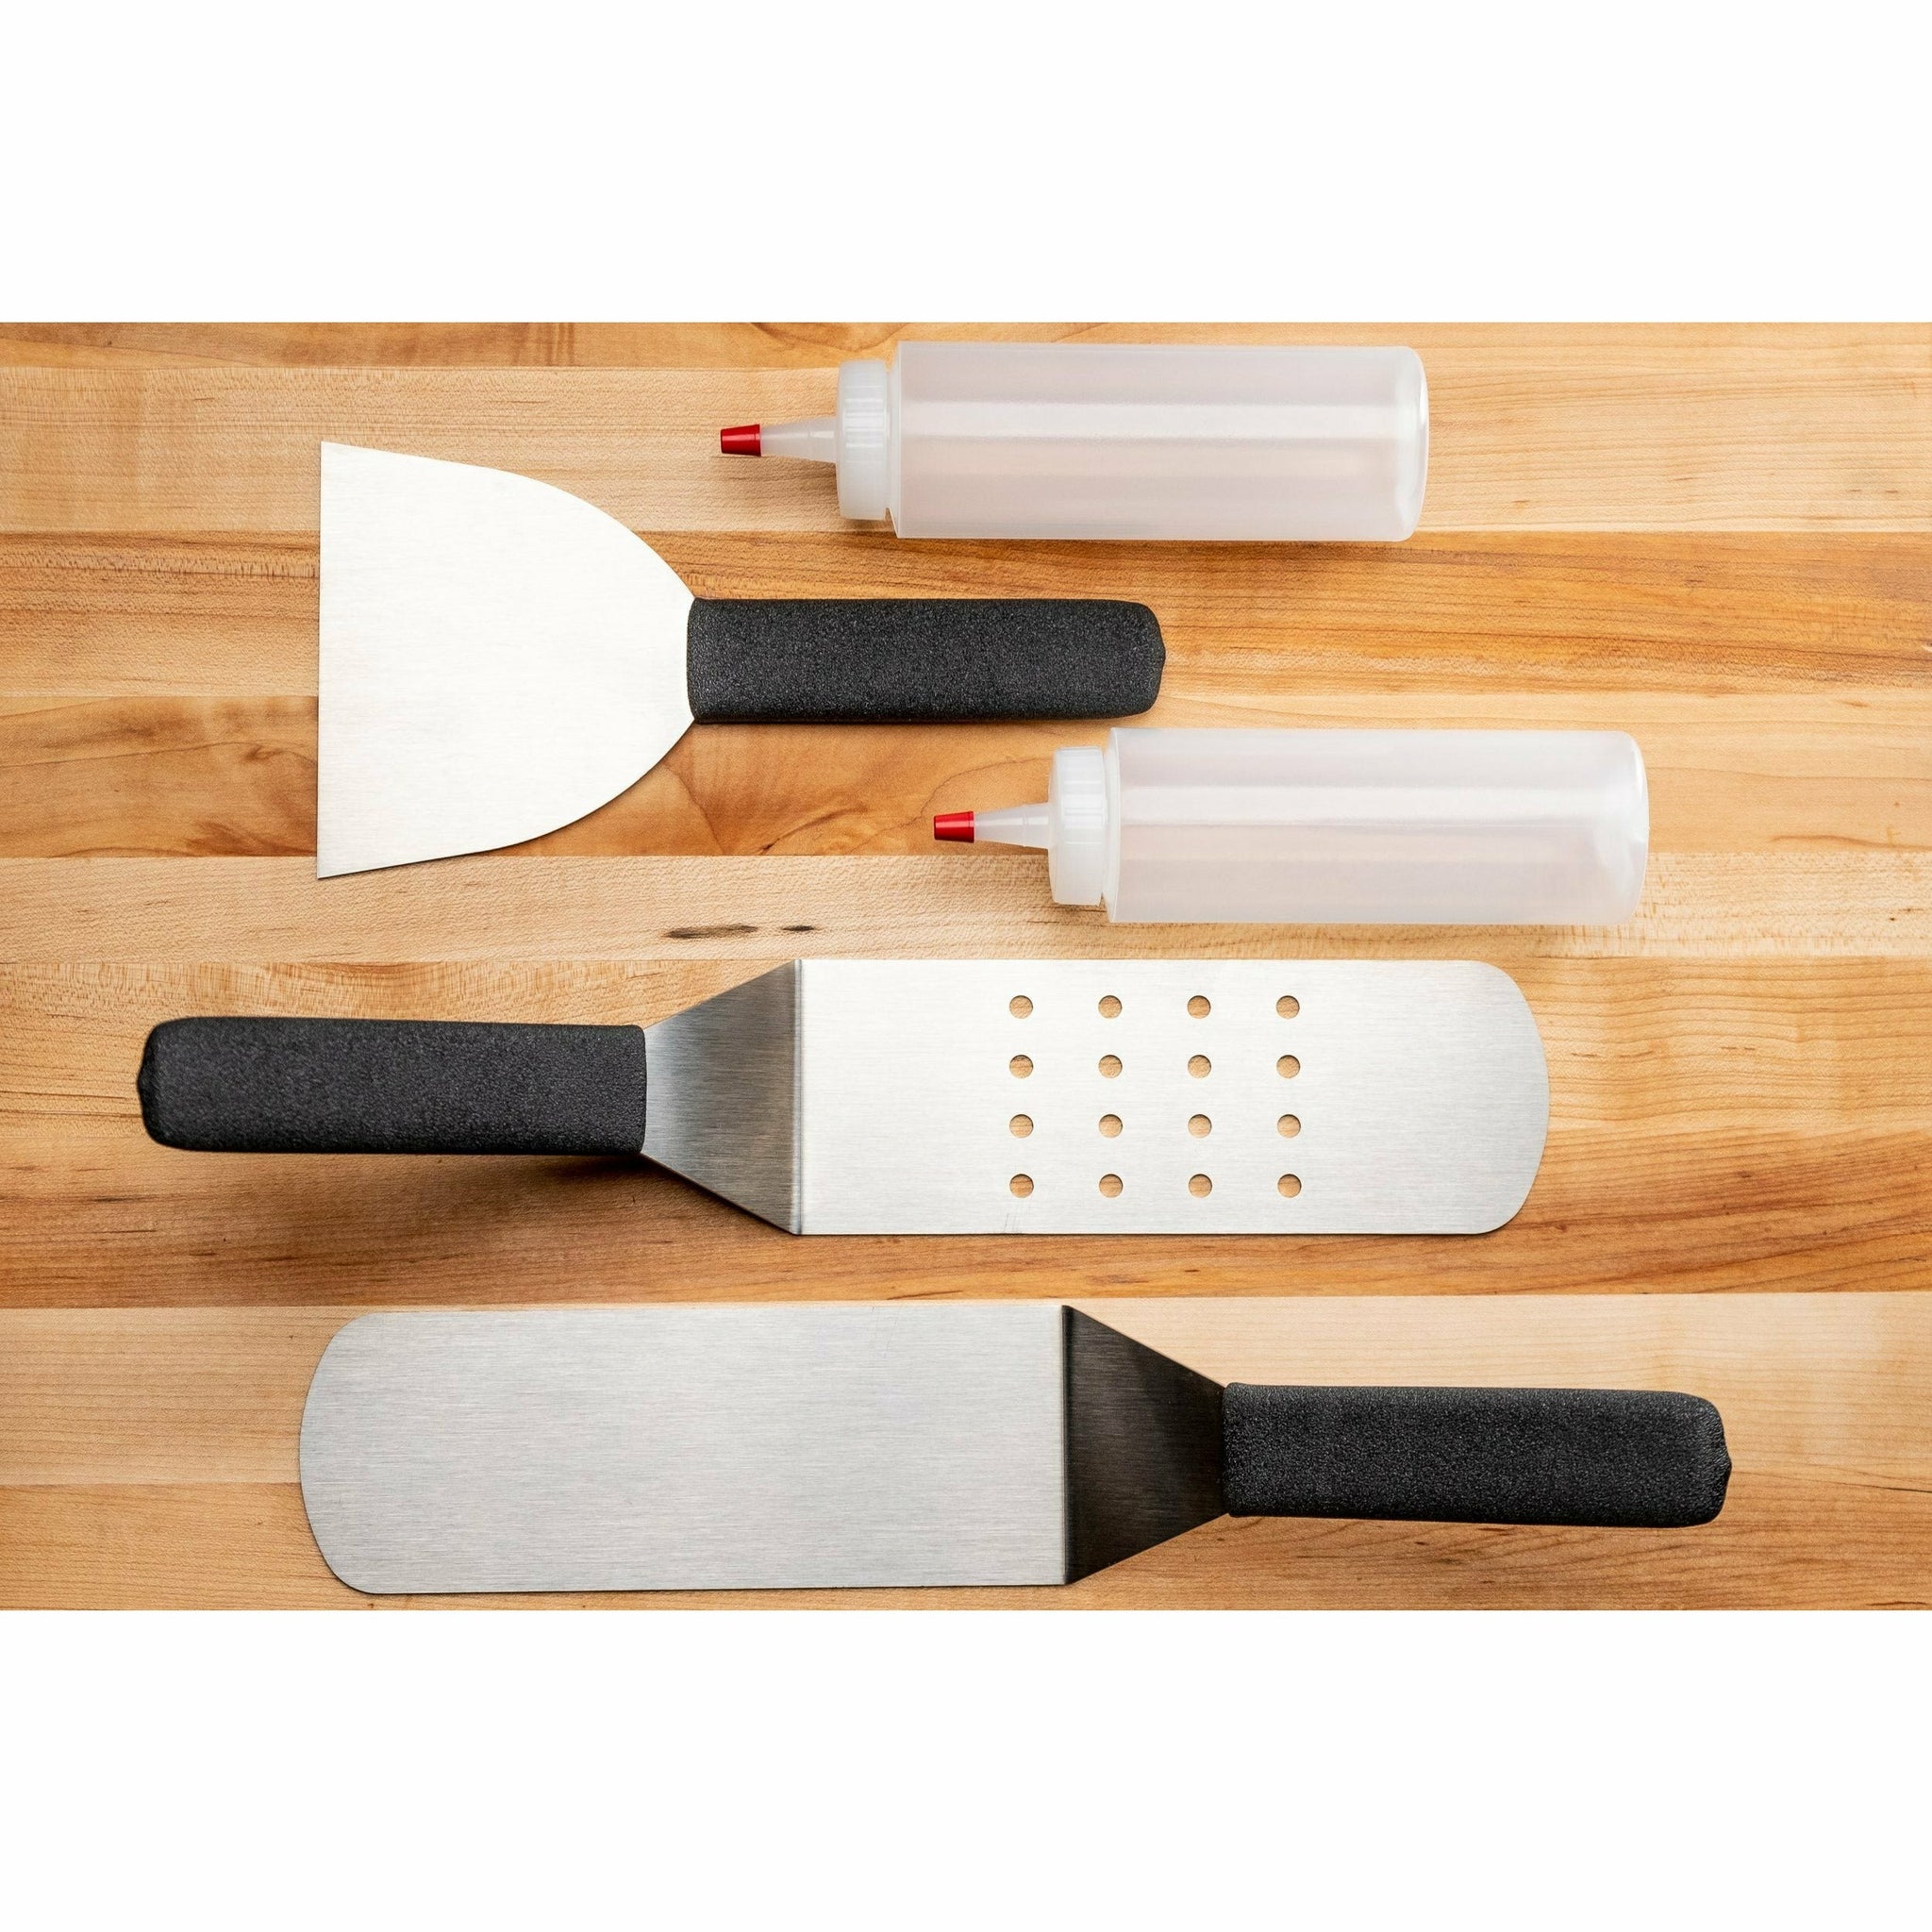 50 Useful Kitchen Gadgets You Didn't Know Existed  Instrumentos de cocina,  Accesorios de cocina, Utensilios de cocina